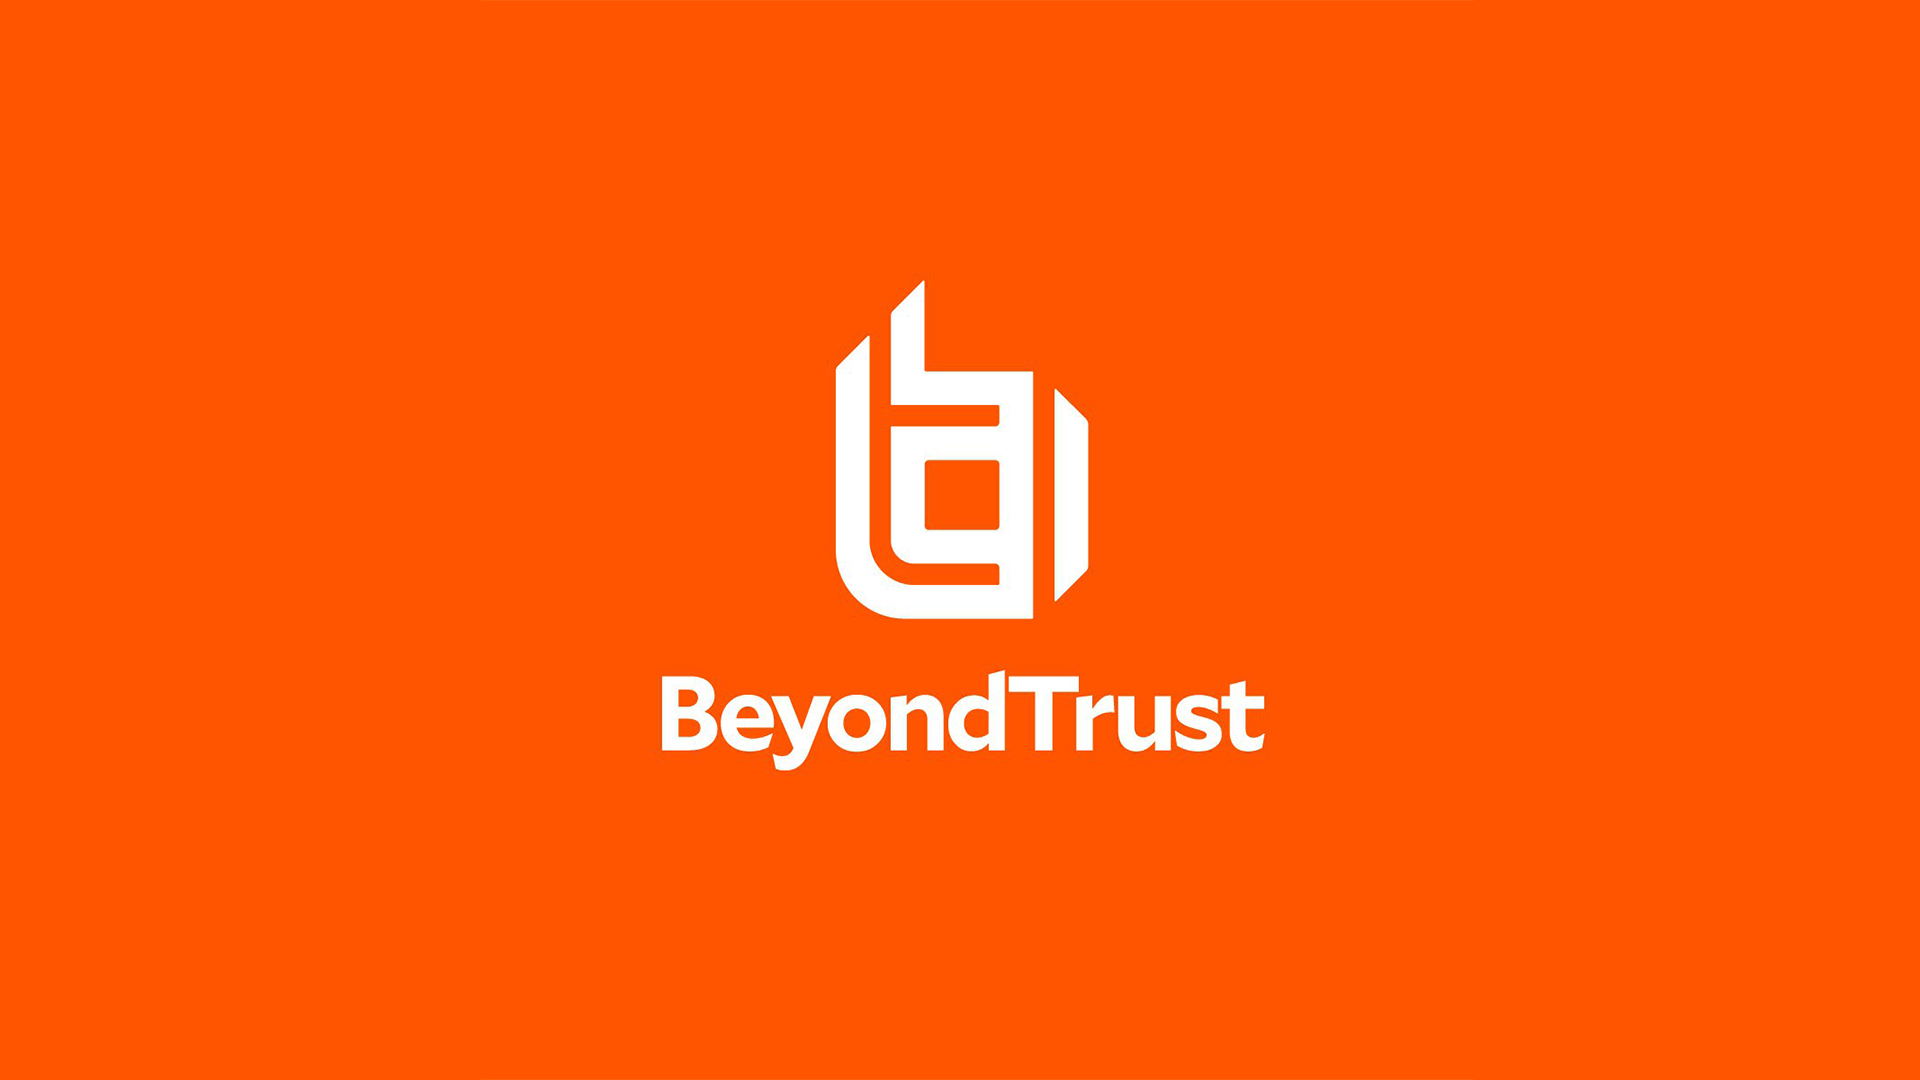 beyondtrust software download